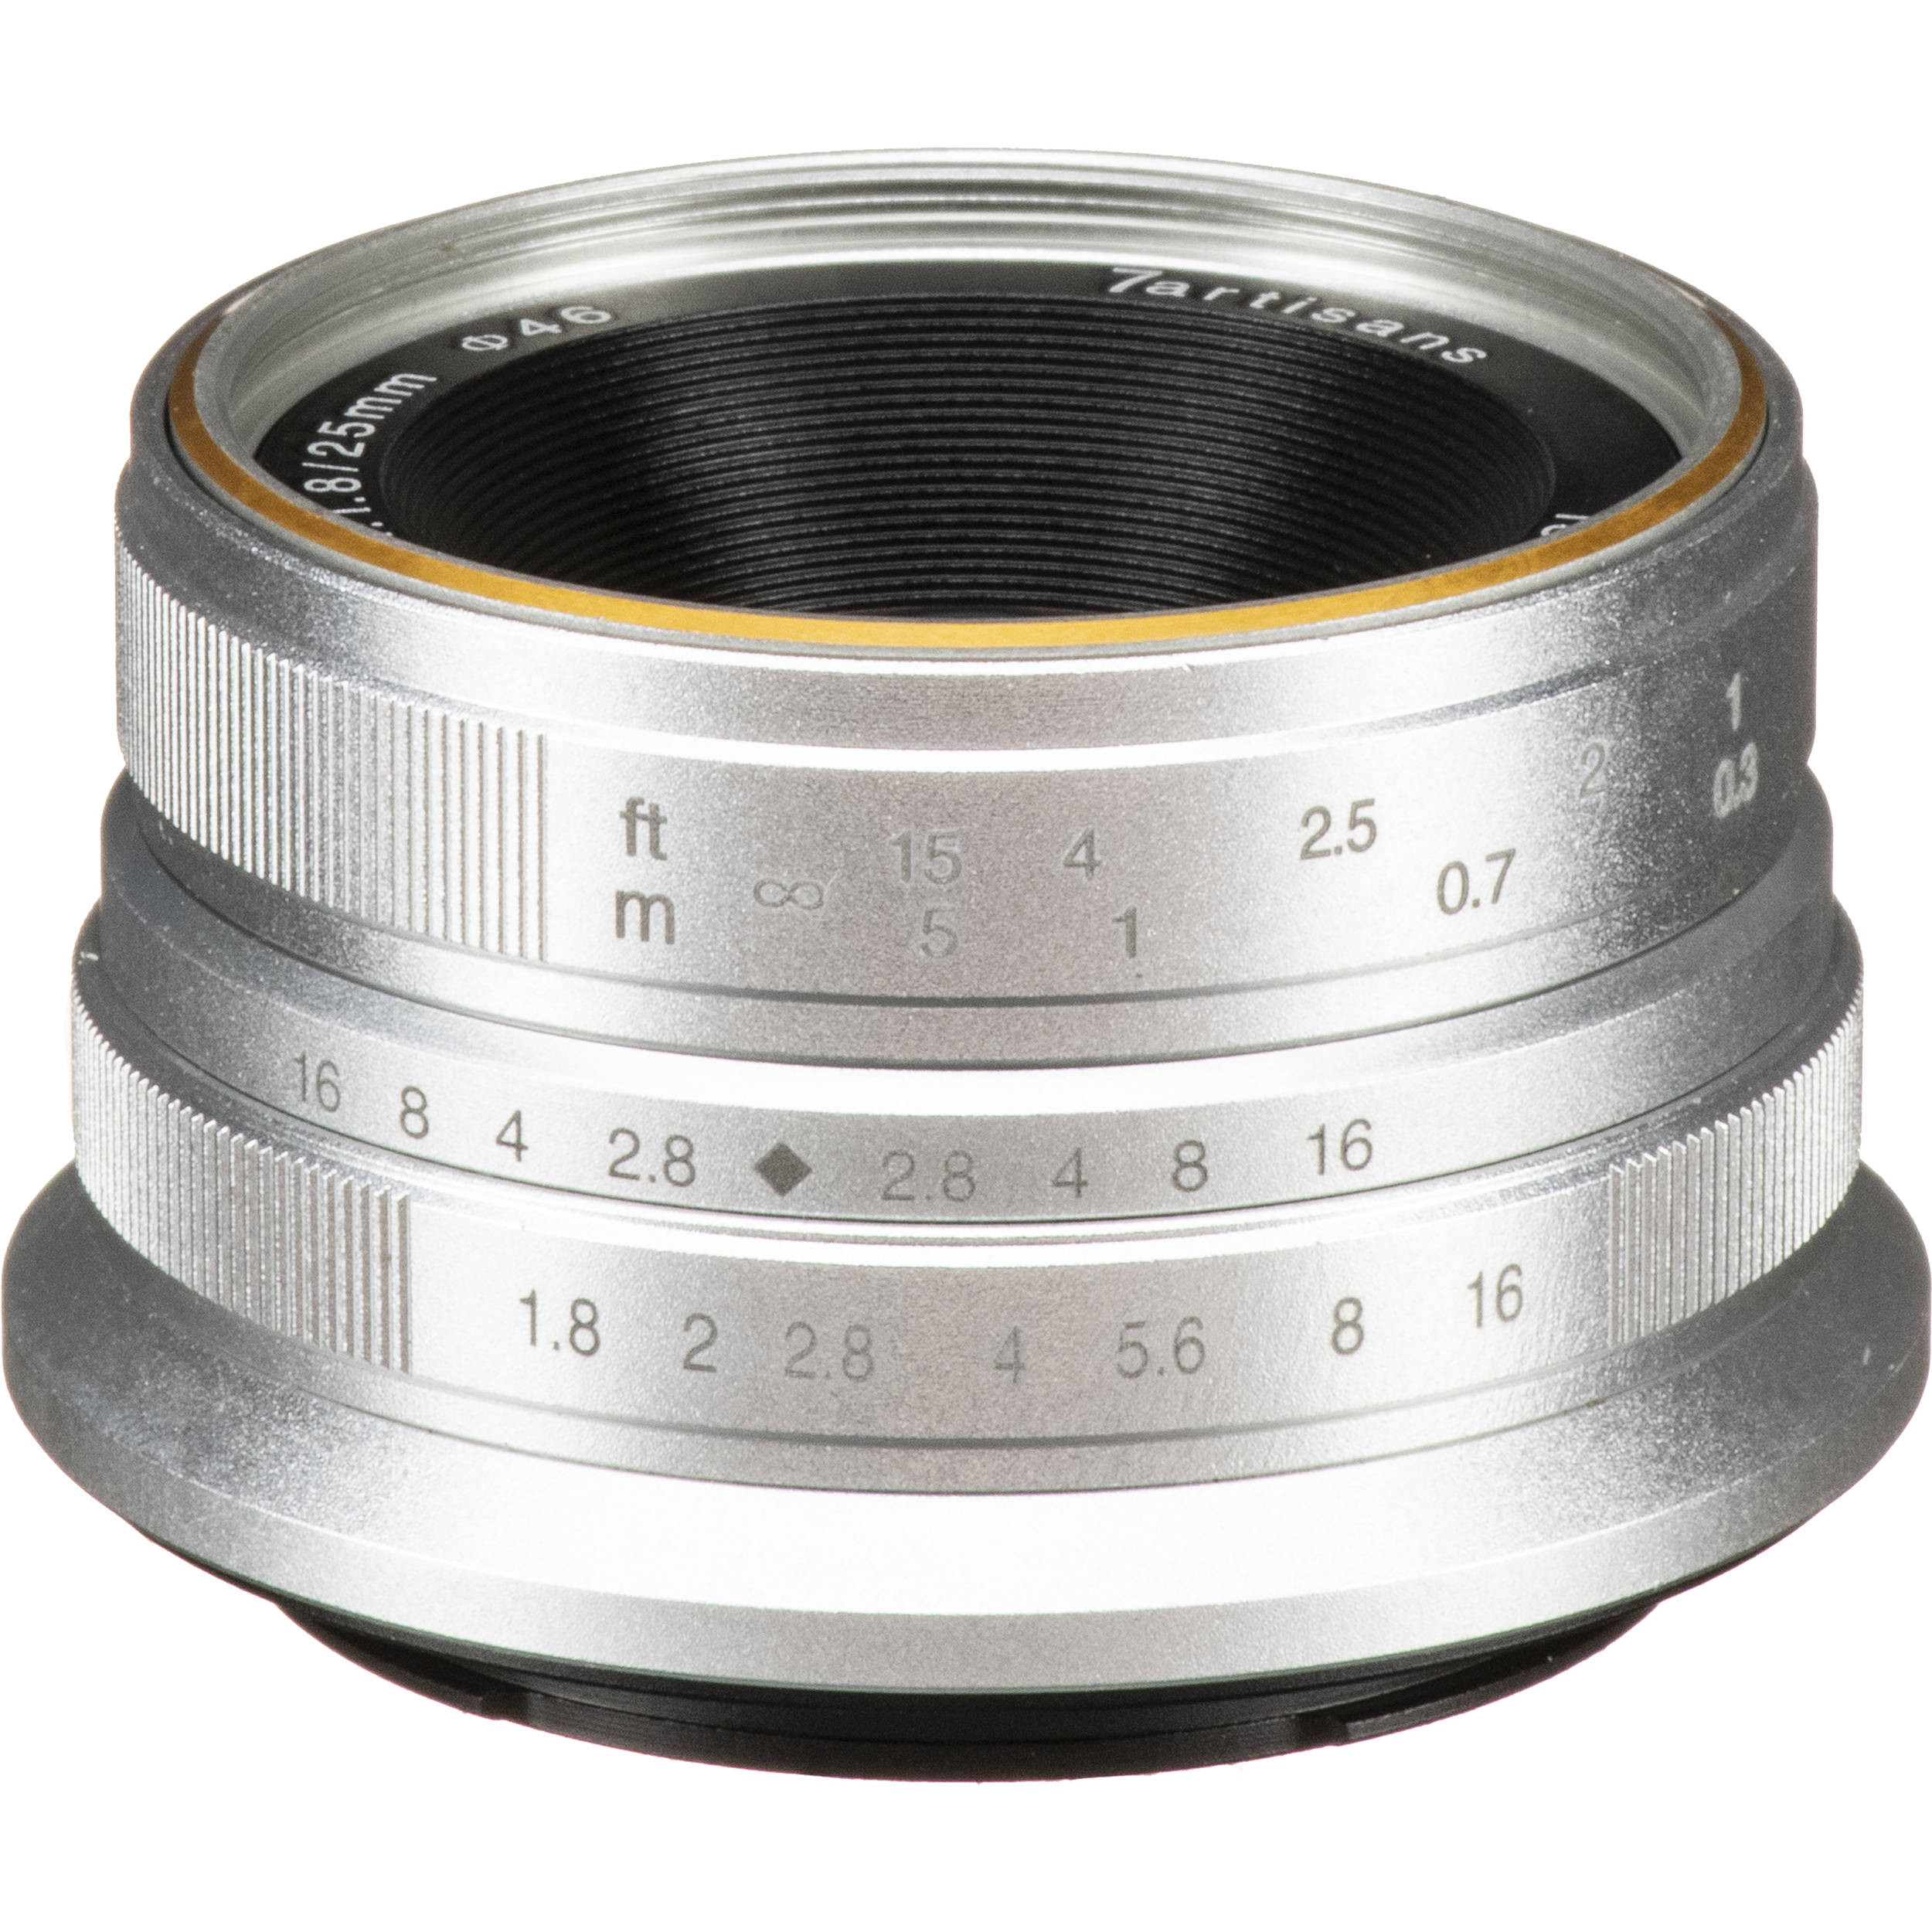 7Artisans 25mm f/1.8 Manual Focus Lens (Canon M Mount) Silver